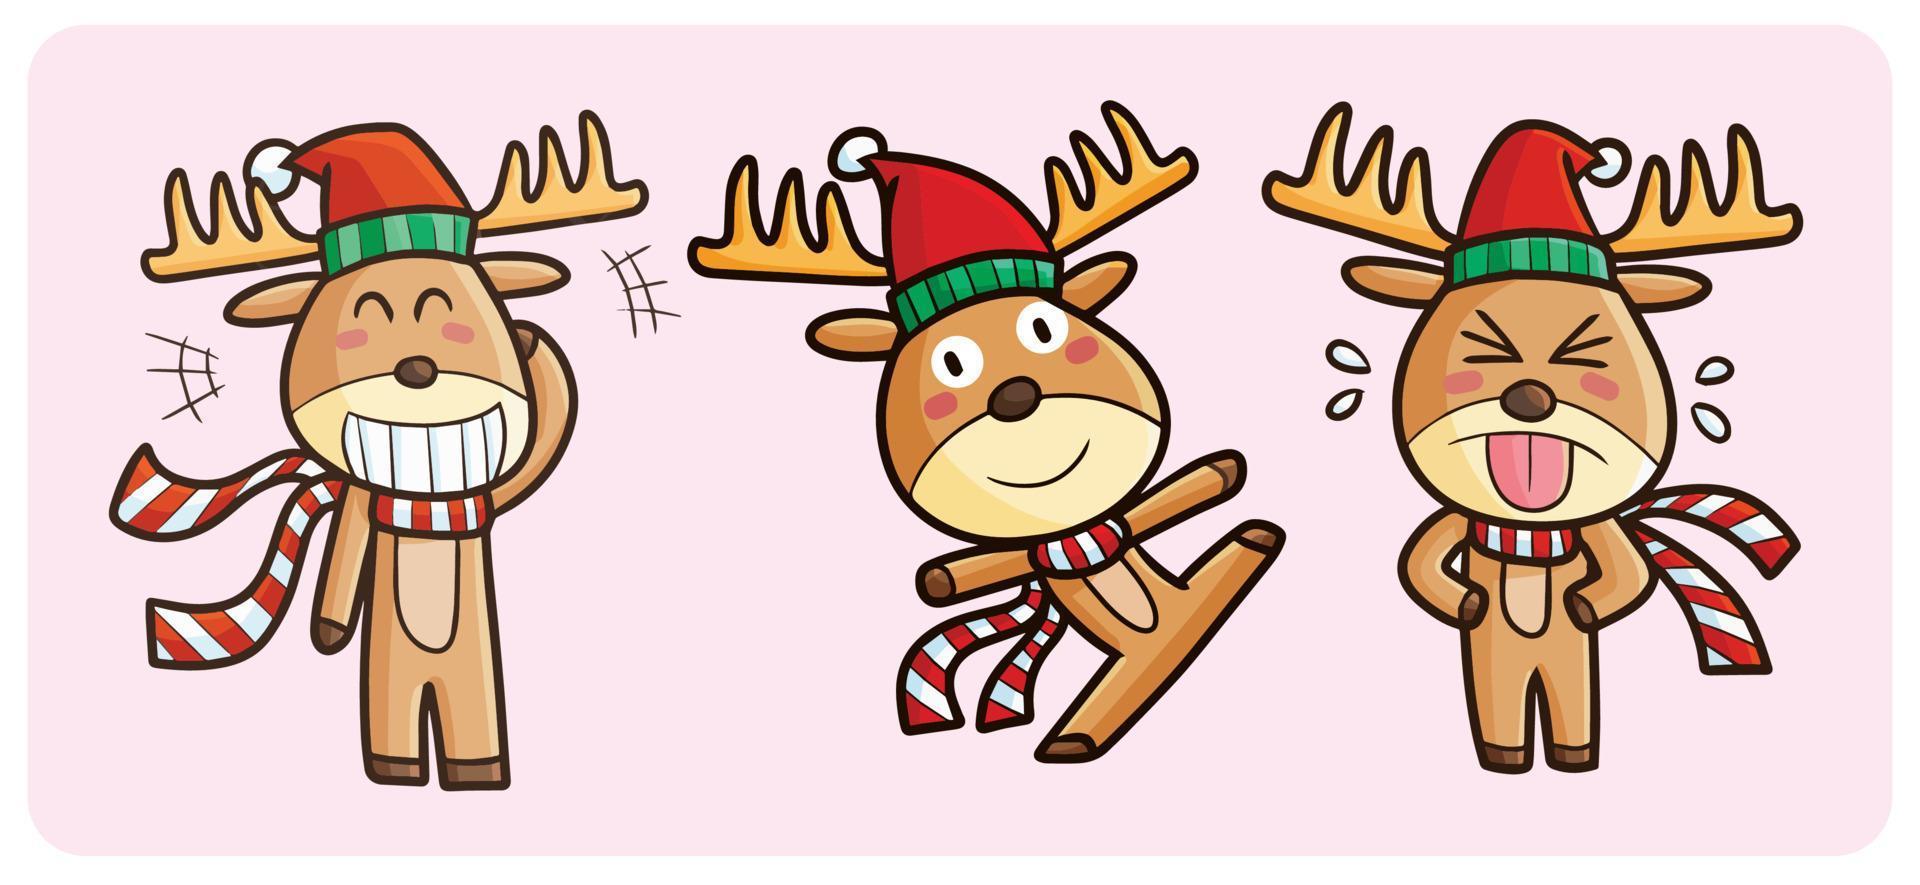 Funny christmas deer cartoo character set vector